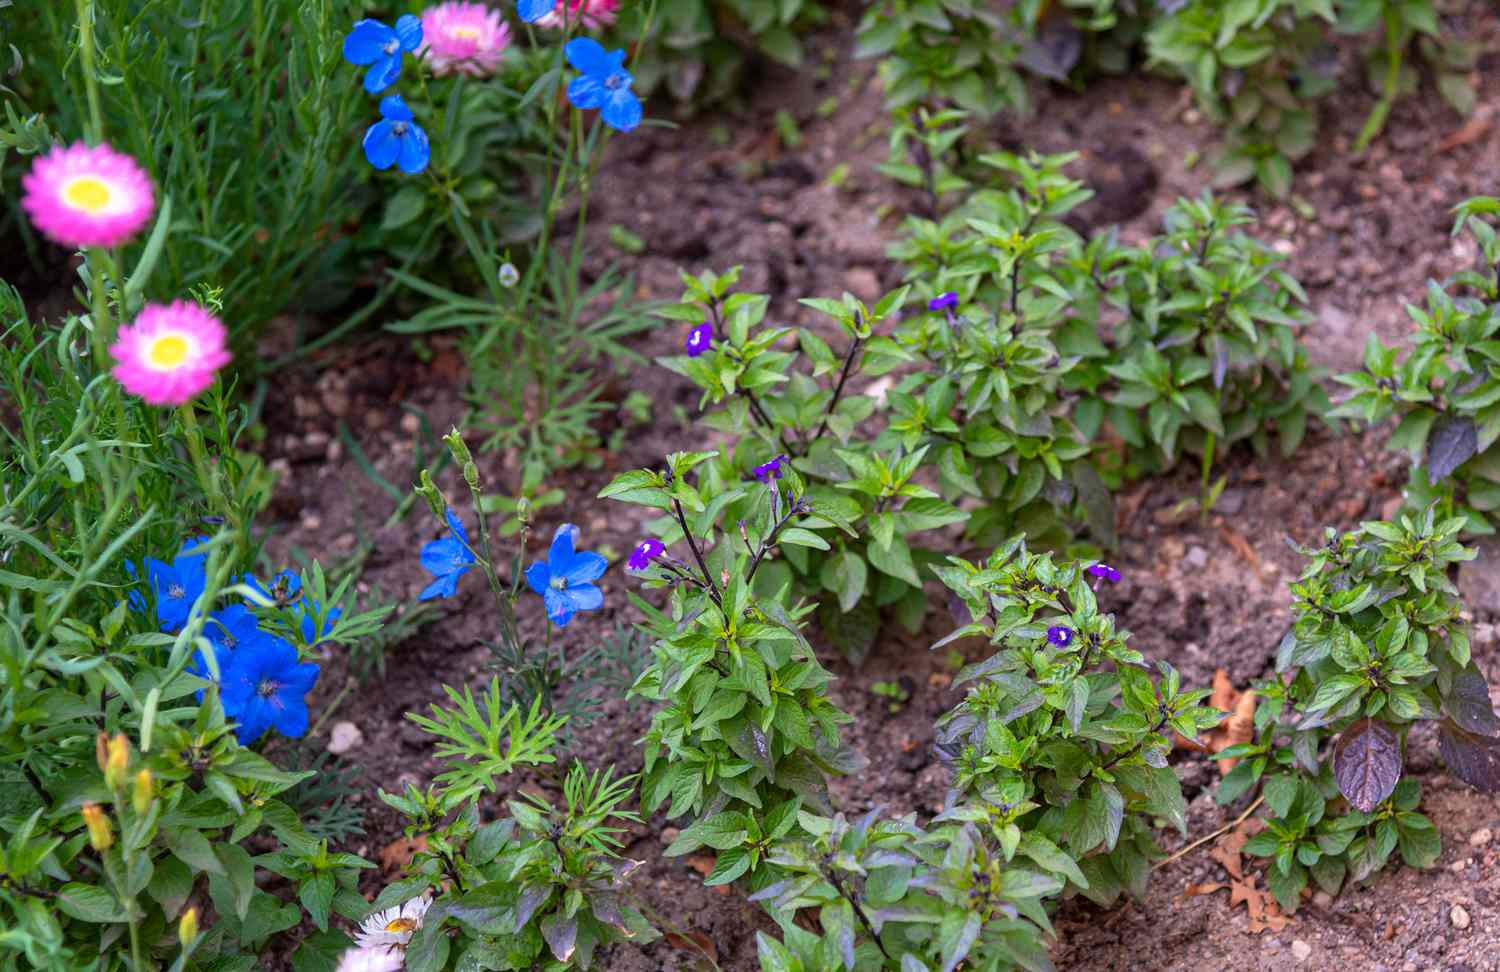 Browallia-Pflanze mit kleinen lilafarbenen Blüten an buschartigen Stängeln im Garten